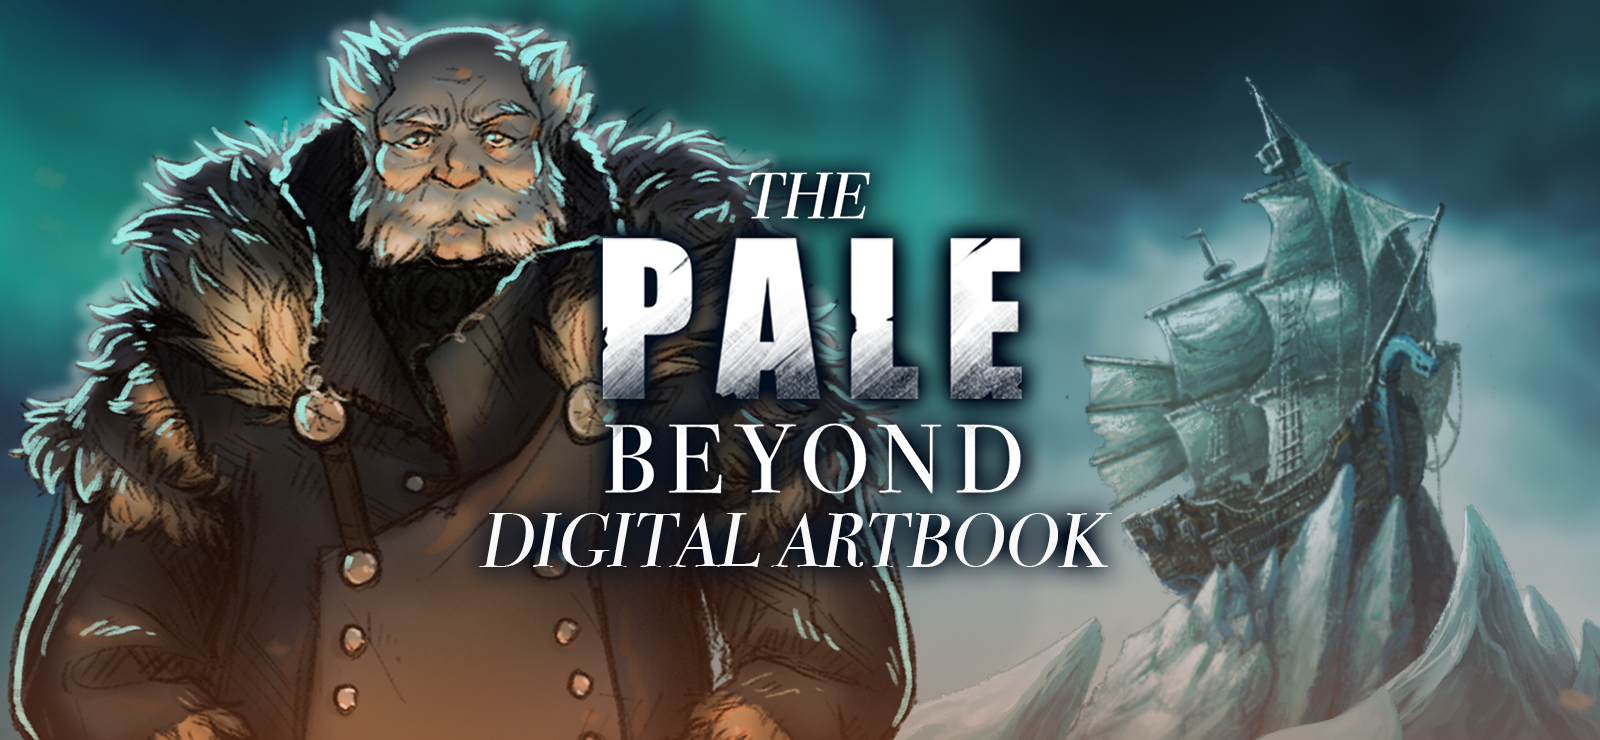 The Pale Beyond Artbook